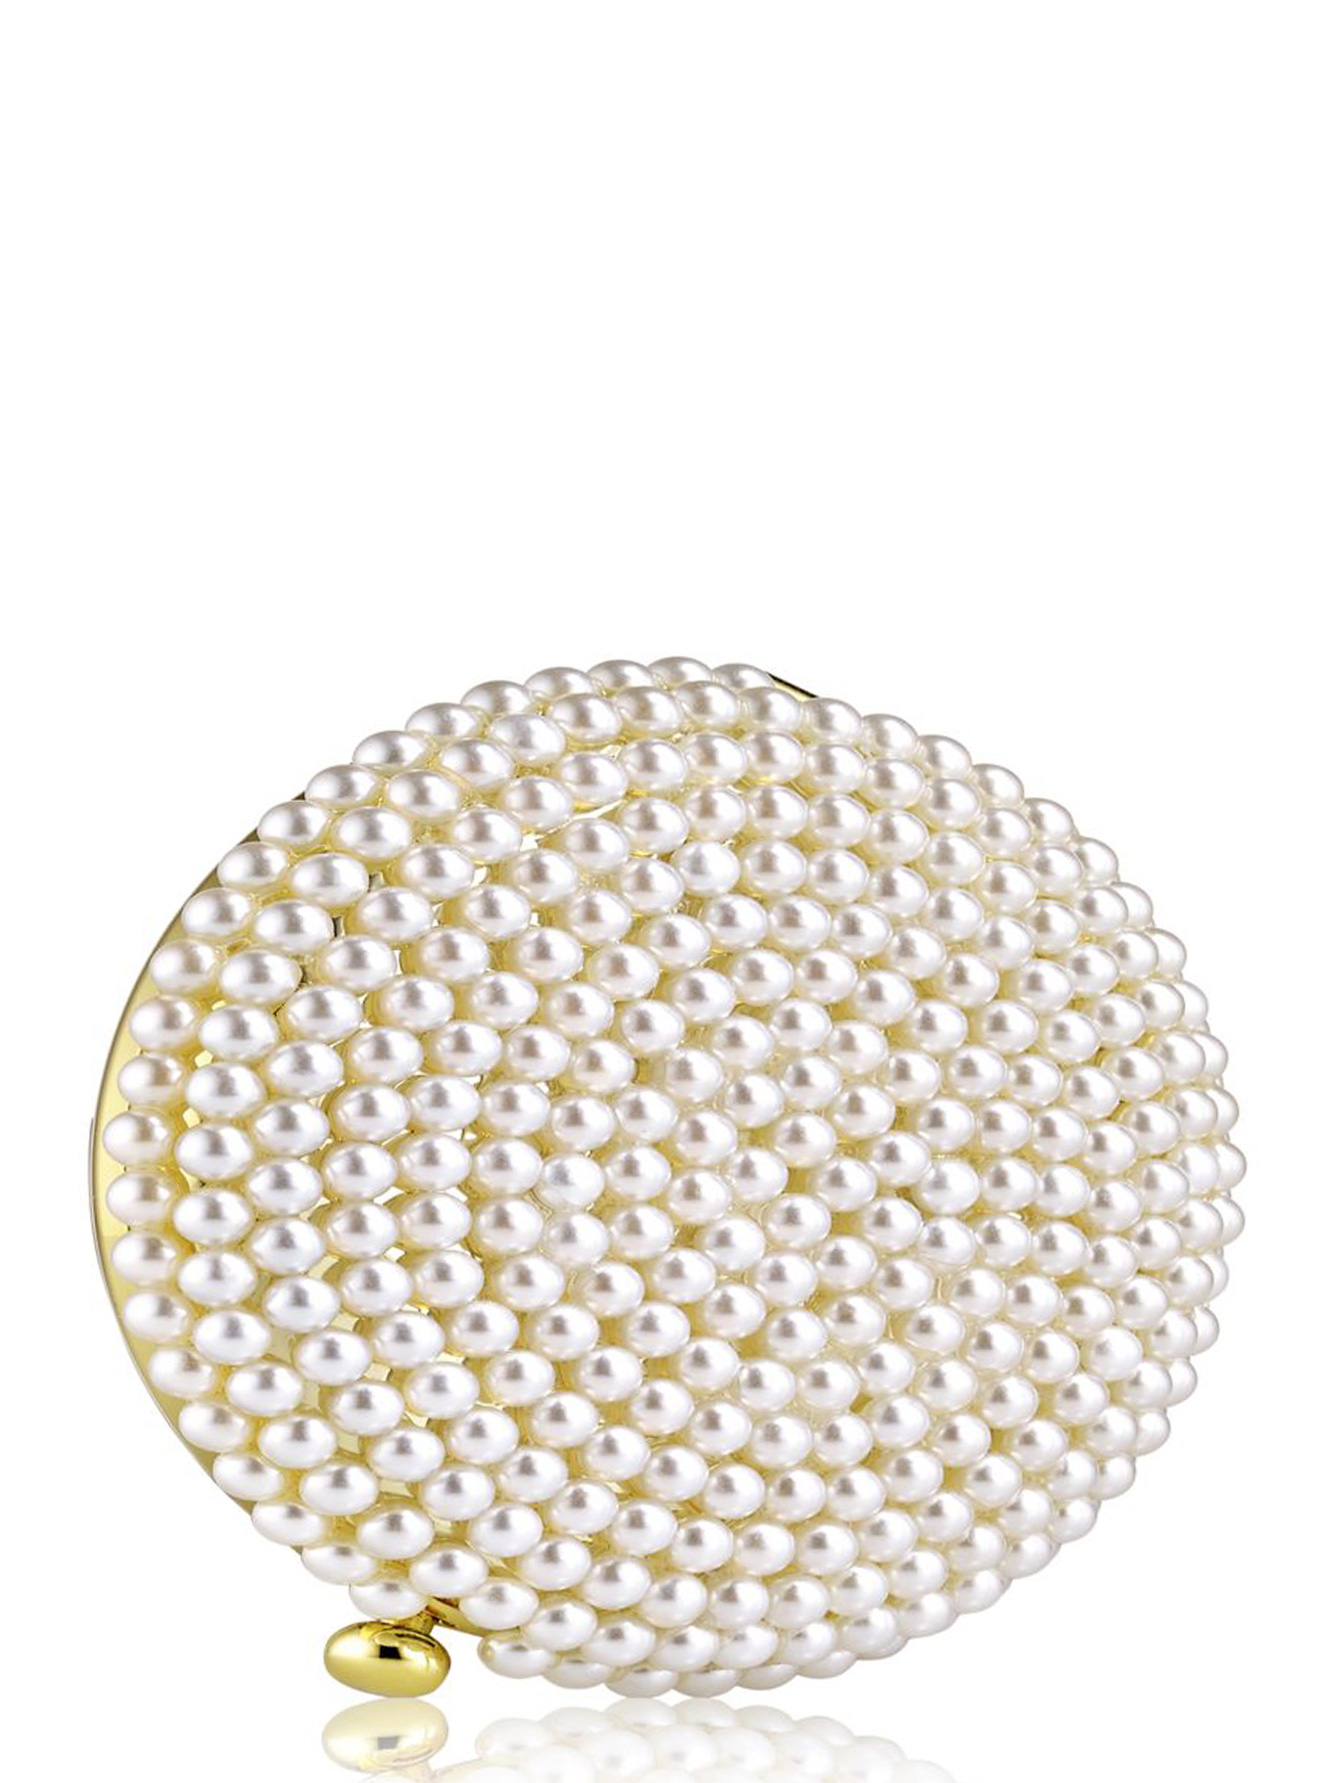  Компактная пудра - Sea of Pearls, Metal Compacts - Общий вид